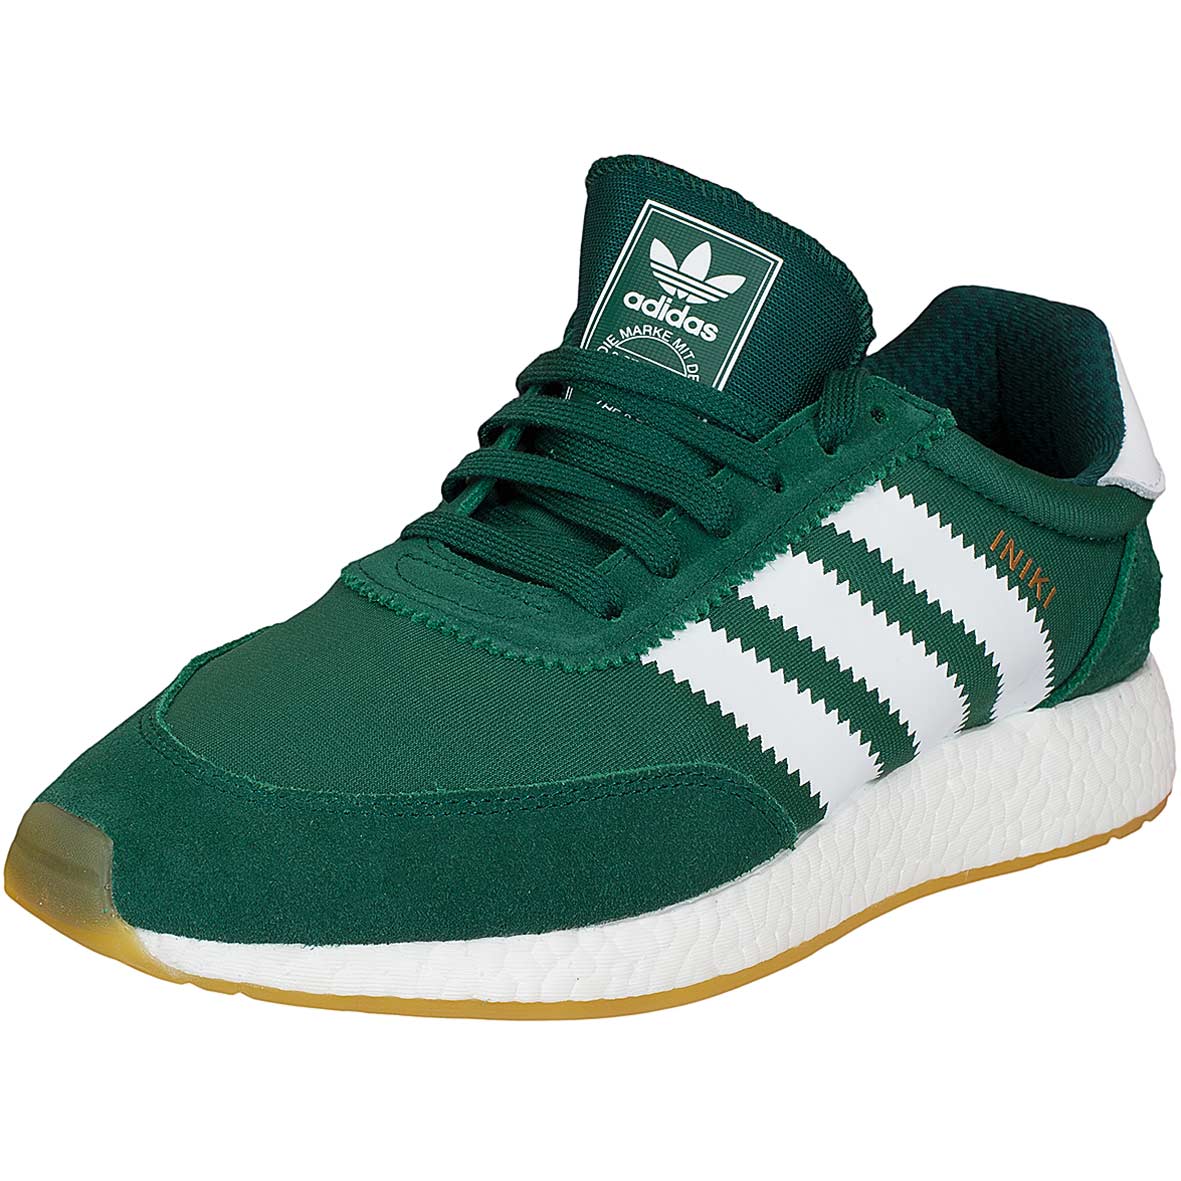 Adidas Originals Sneaker Iniki Runner grün/weiß - hier bestellen!